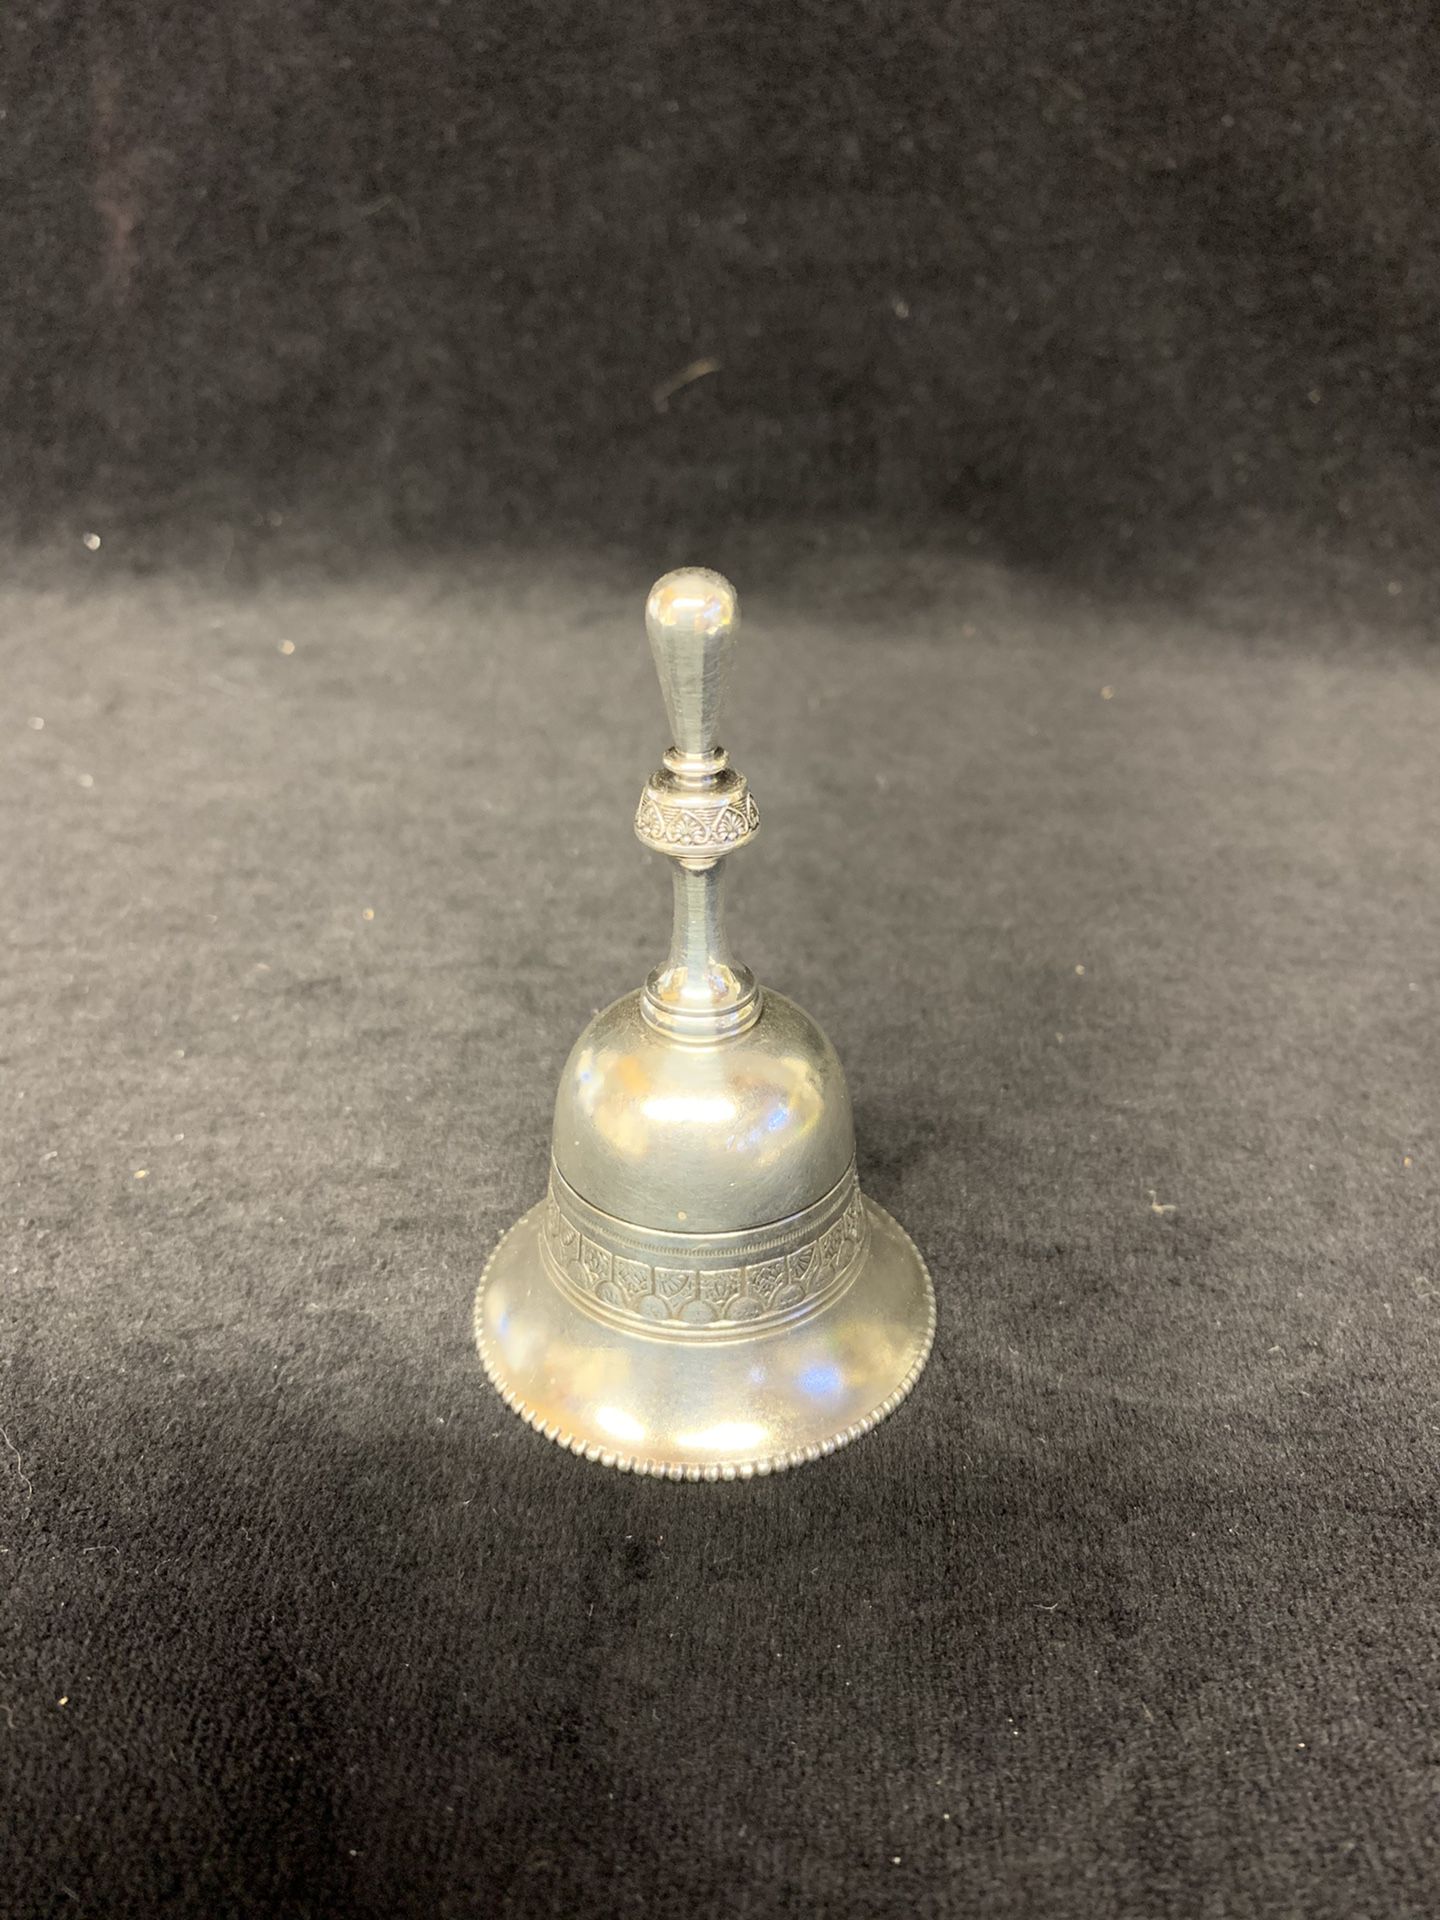 Vintage silver service bell